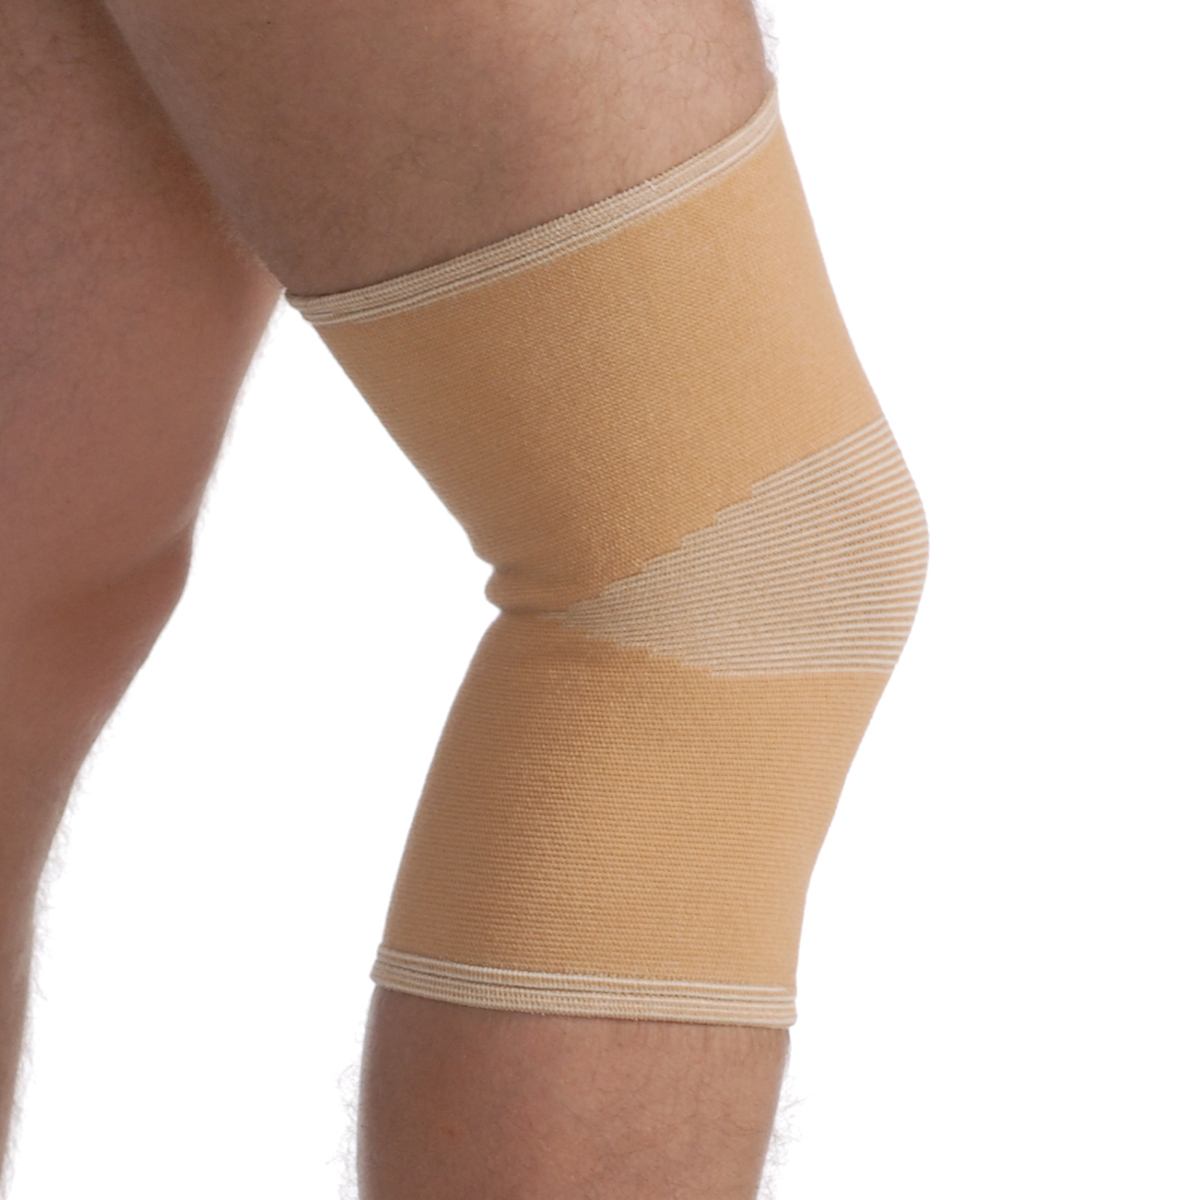 Bandáž kolene elastická béžová, Medtextile, 6002 vel. M